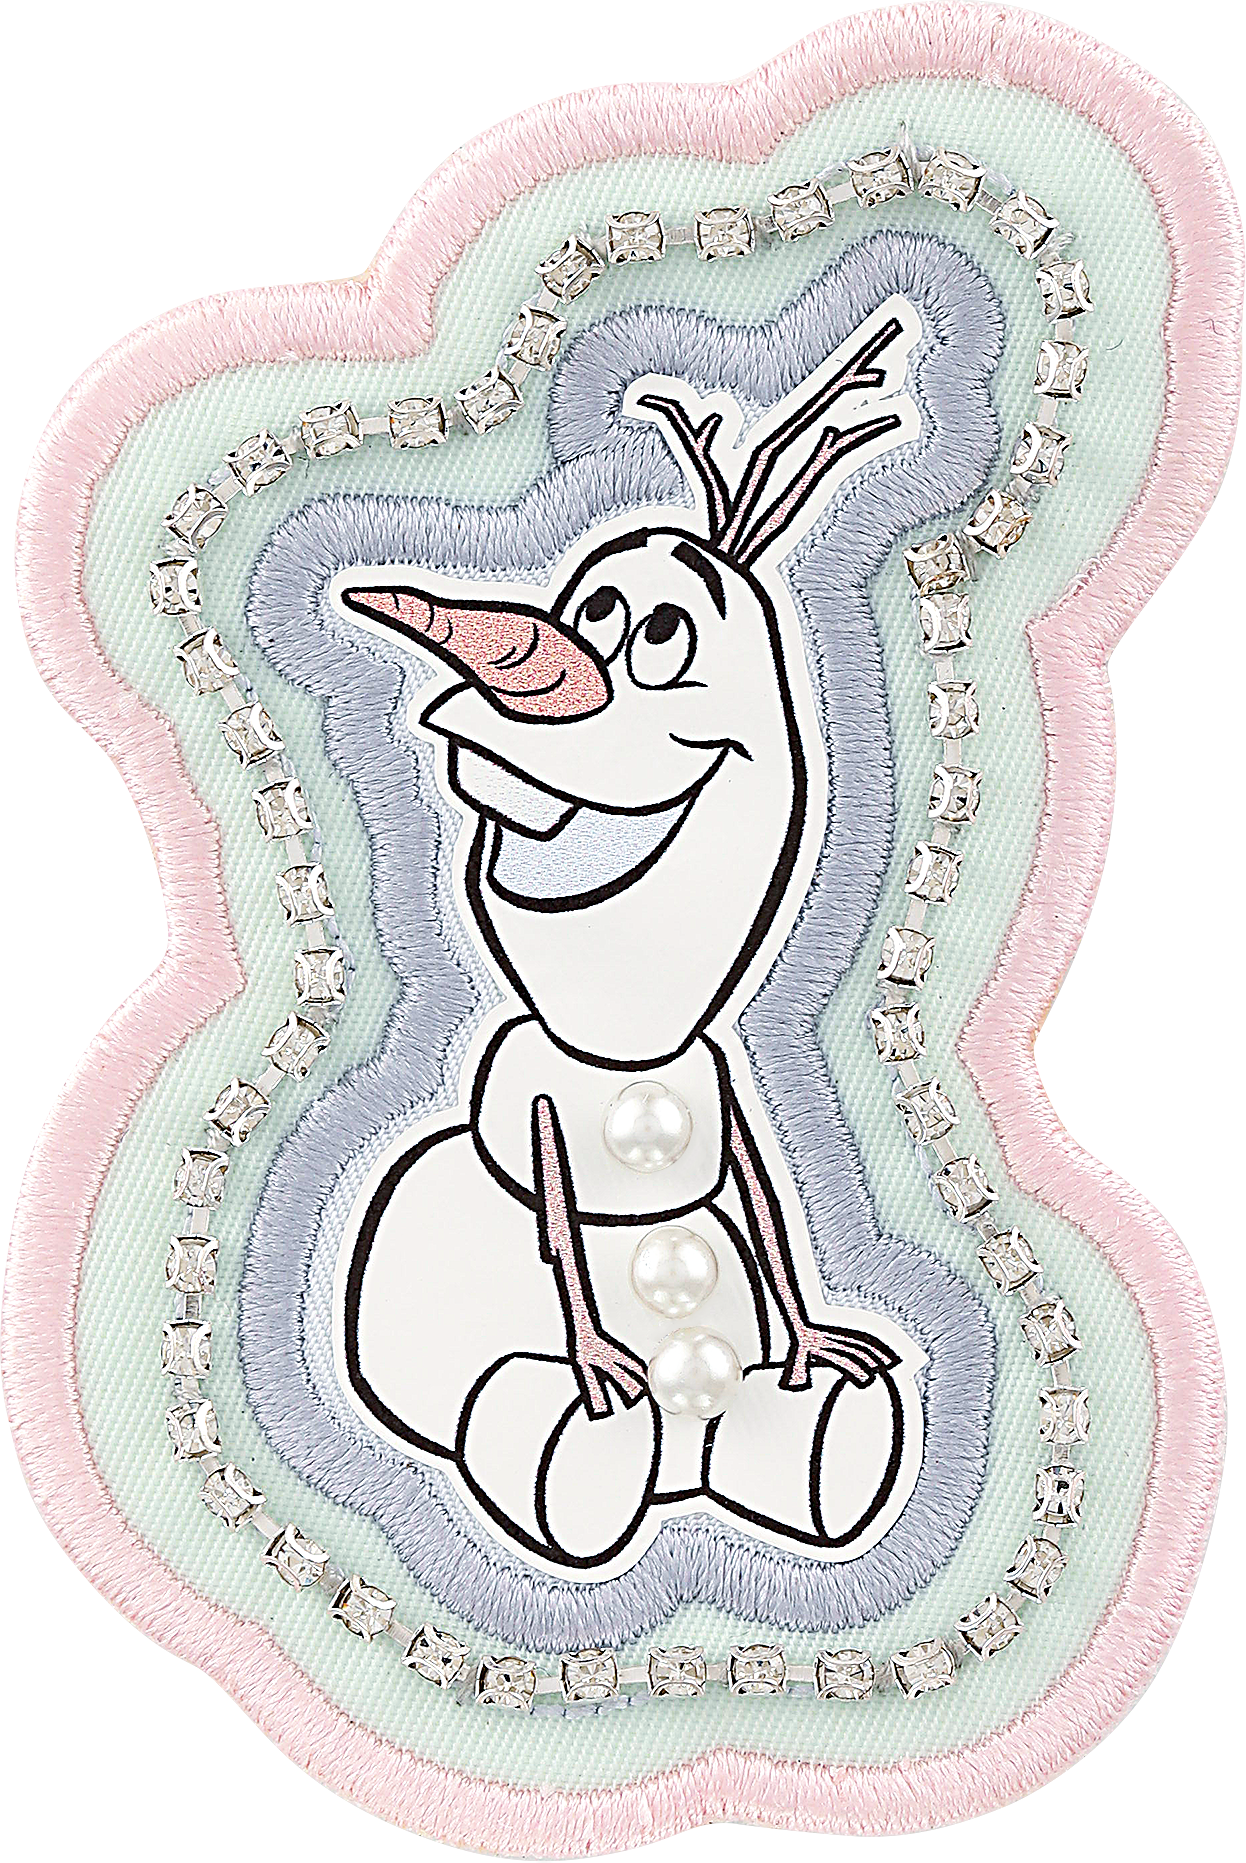 Disney Frozen Olaf Patch